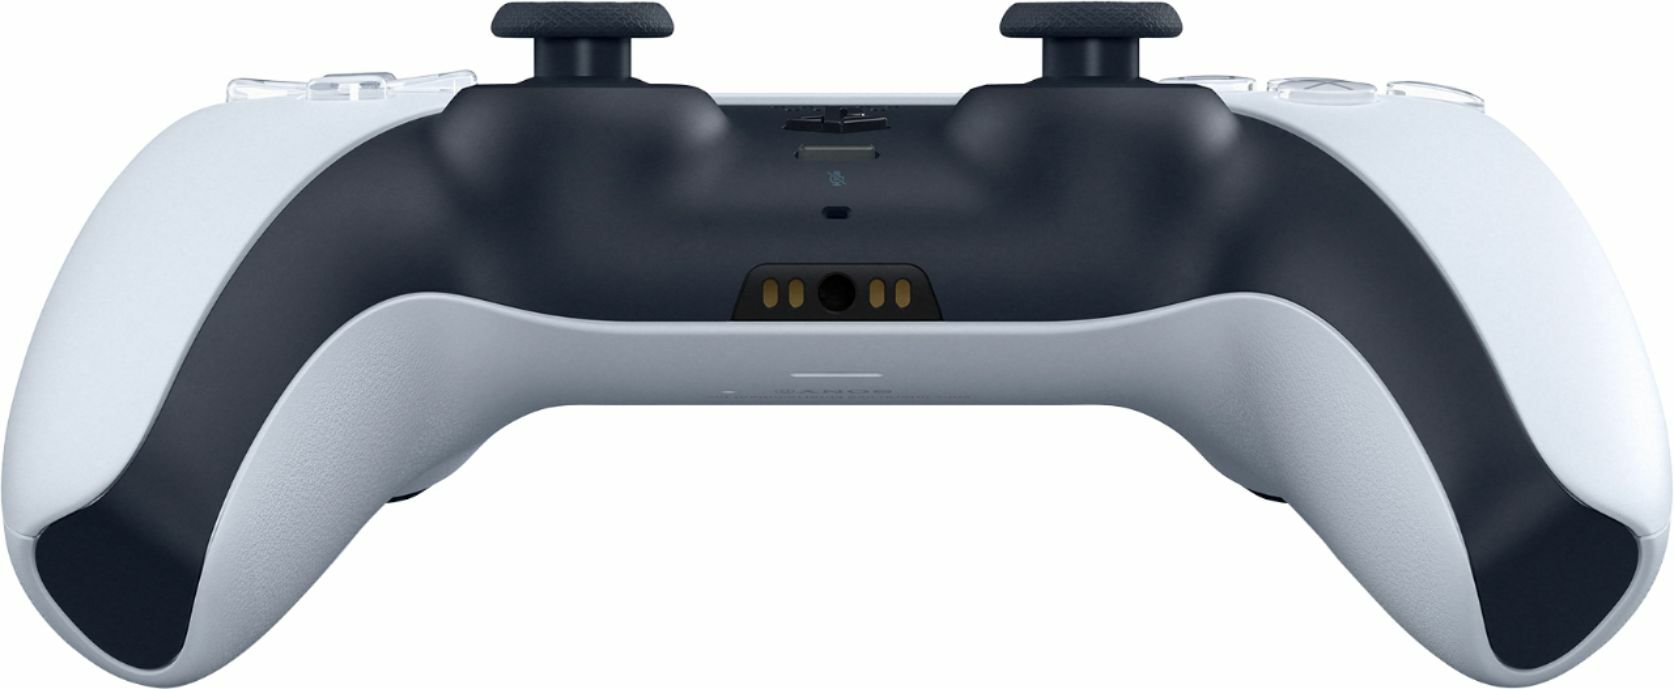 SONY DualSense for PlayStation 5 Gamepad White